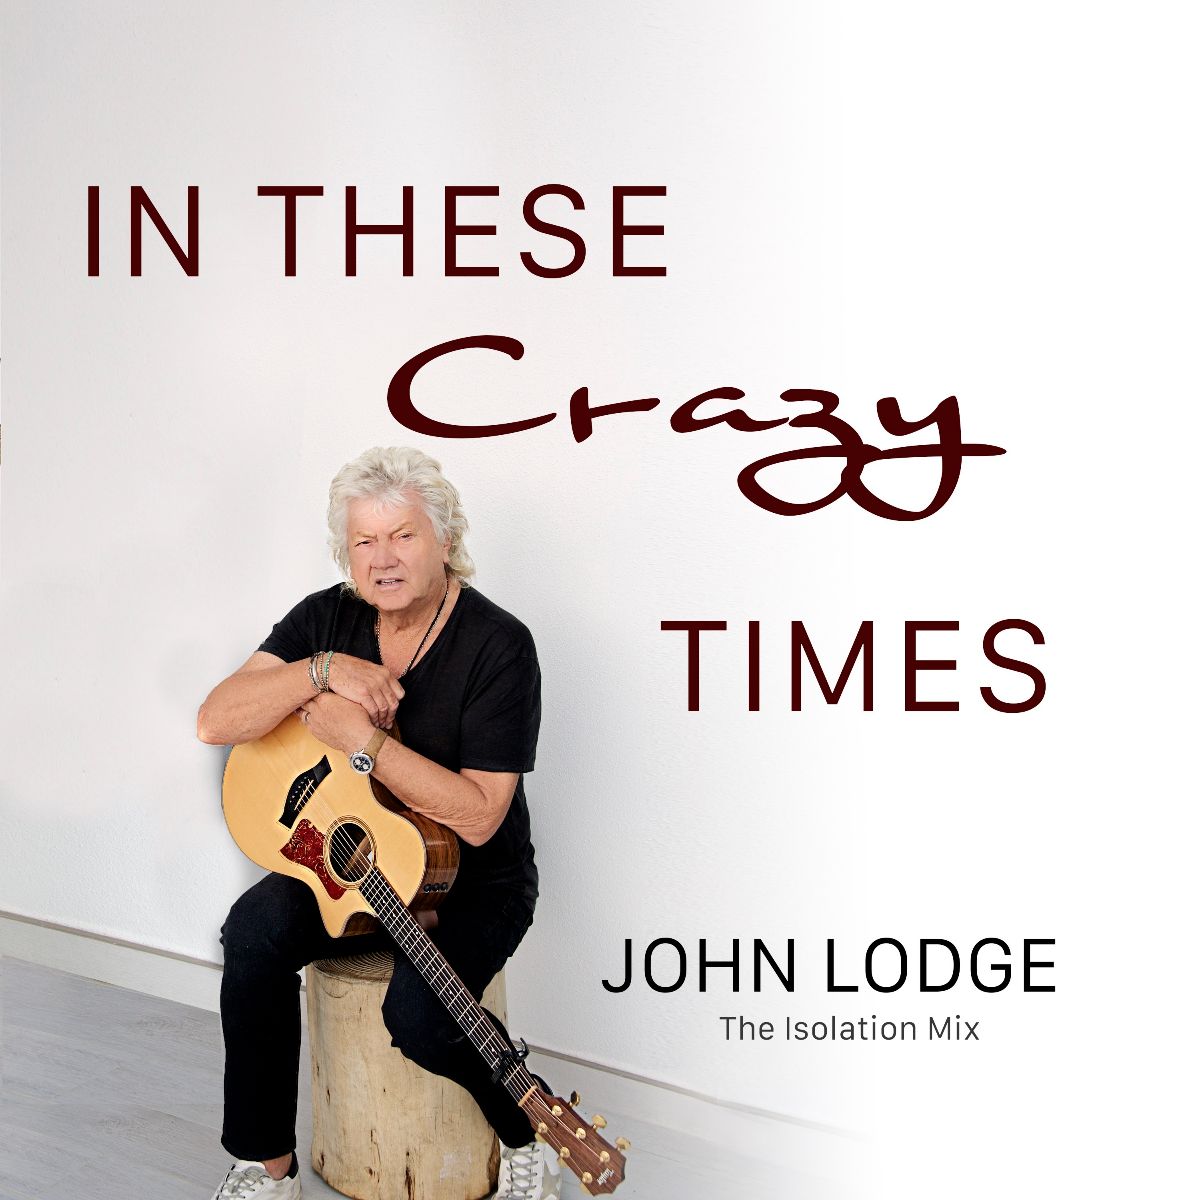 THE MOODY BLUES’ JOHN LODGE NEW SINGLE RELEASED